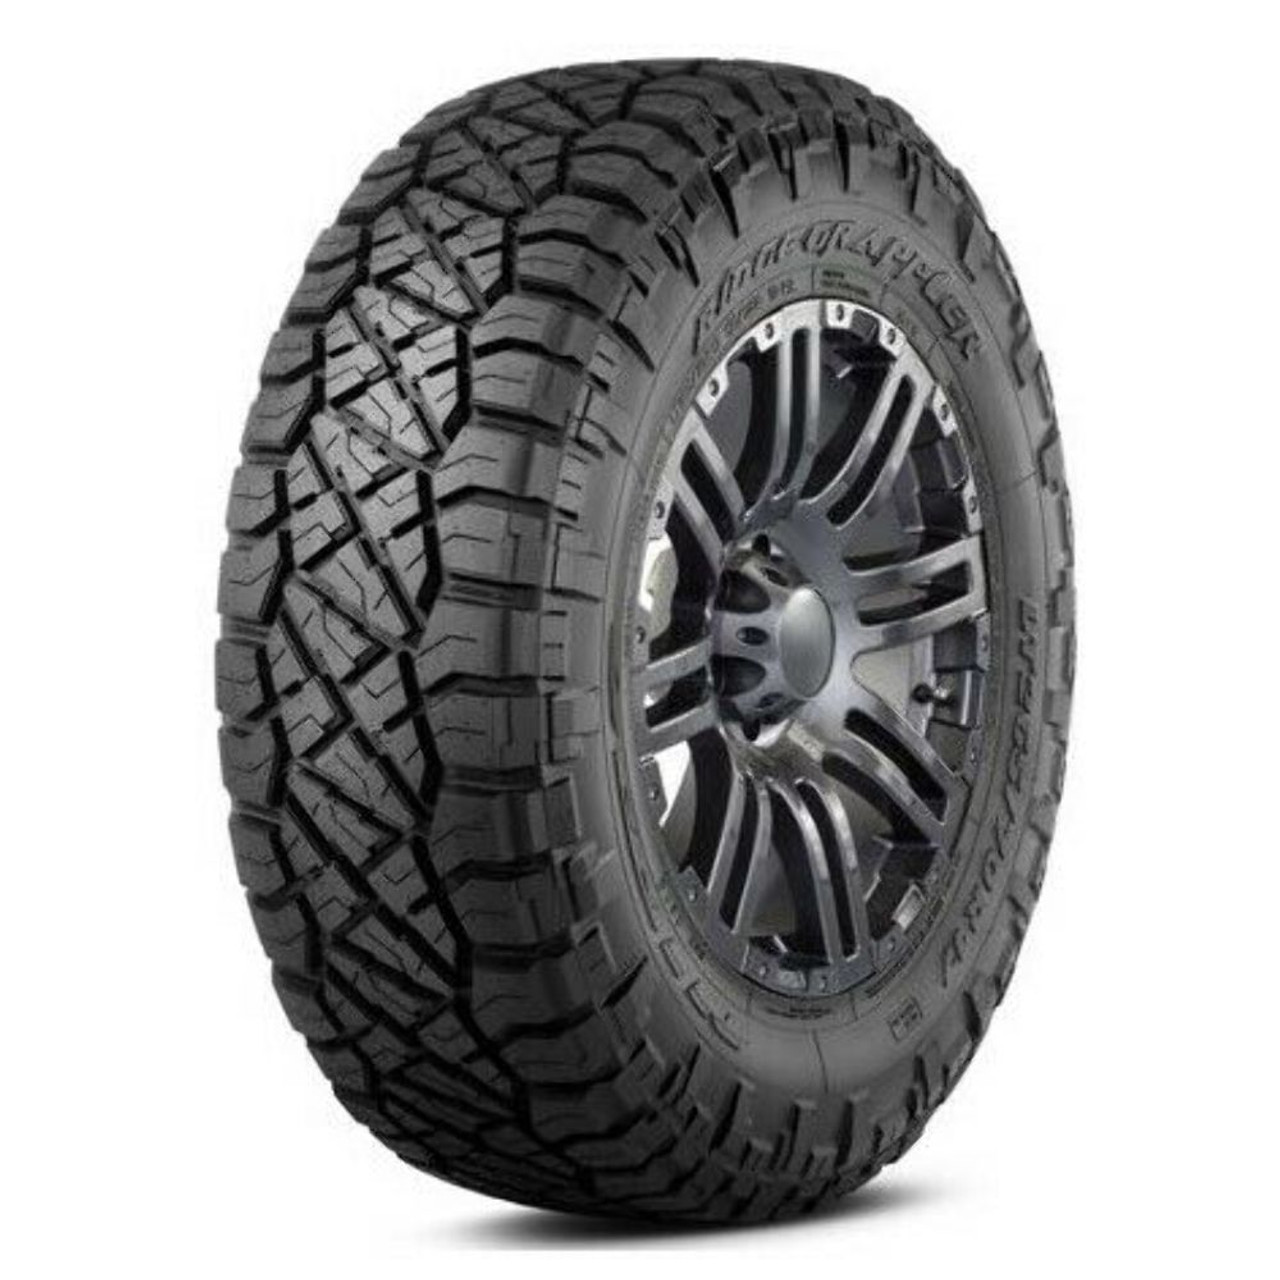 265/65R18 116T XL Set 4 Nitto Ridge Grappler Hybrid Terrain Tires 31.5 2656518